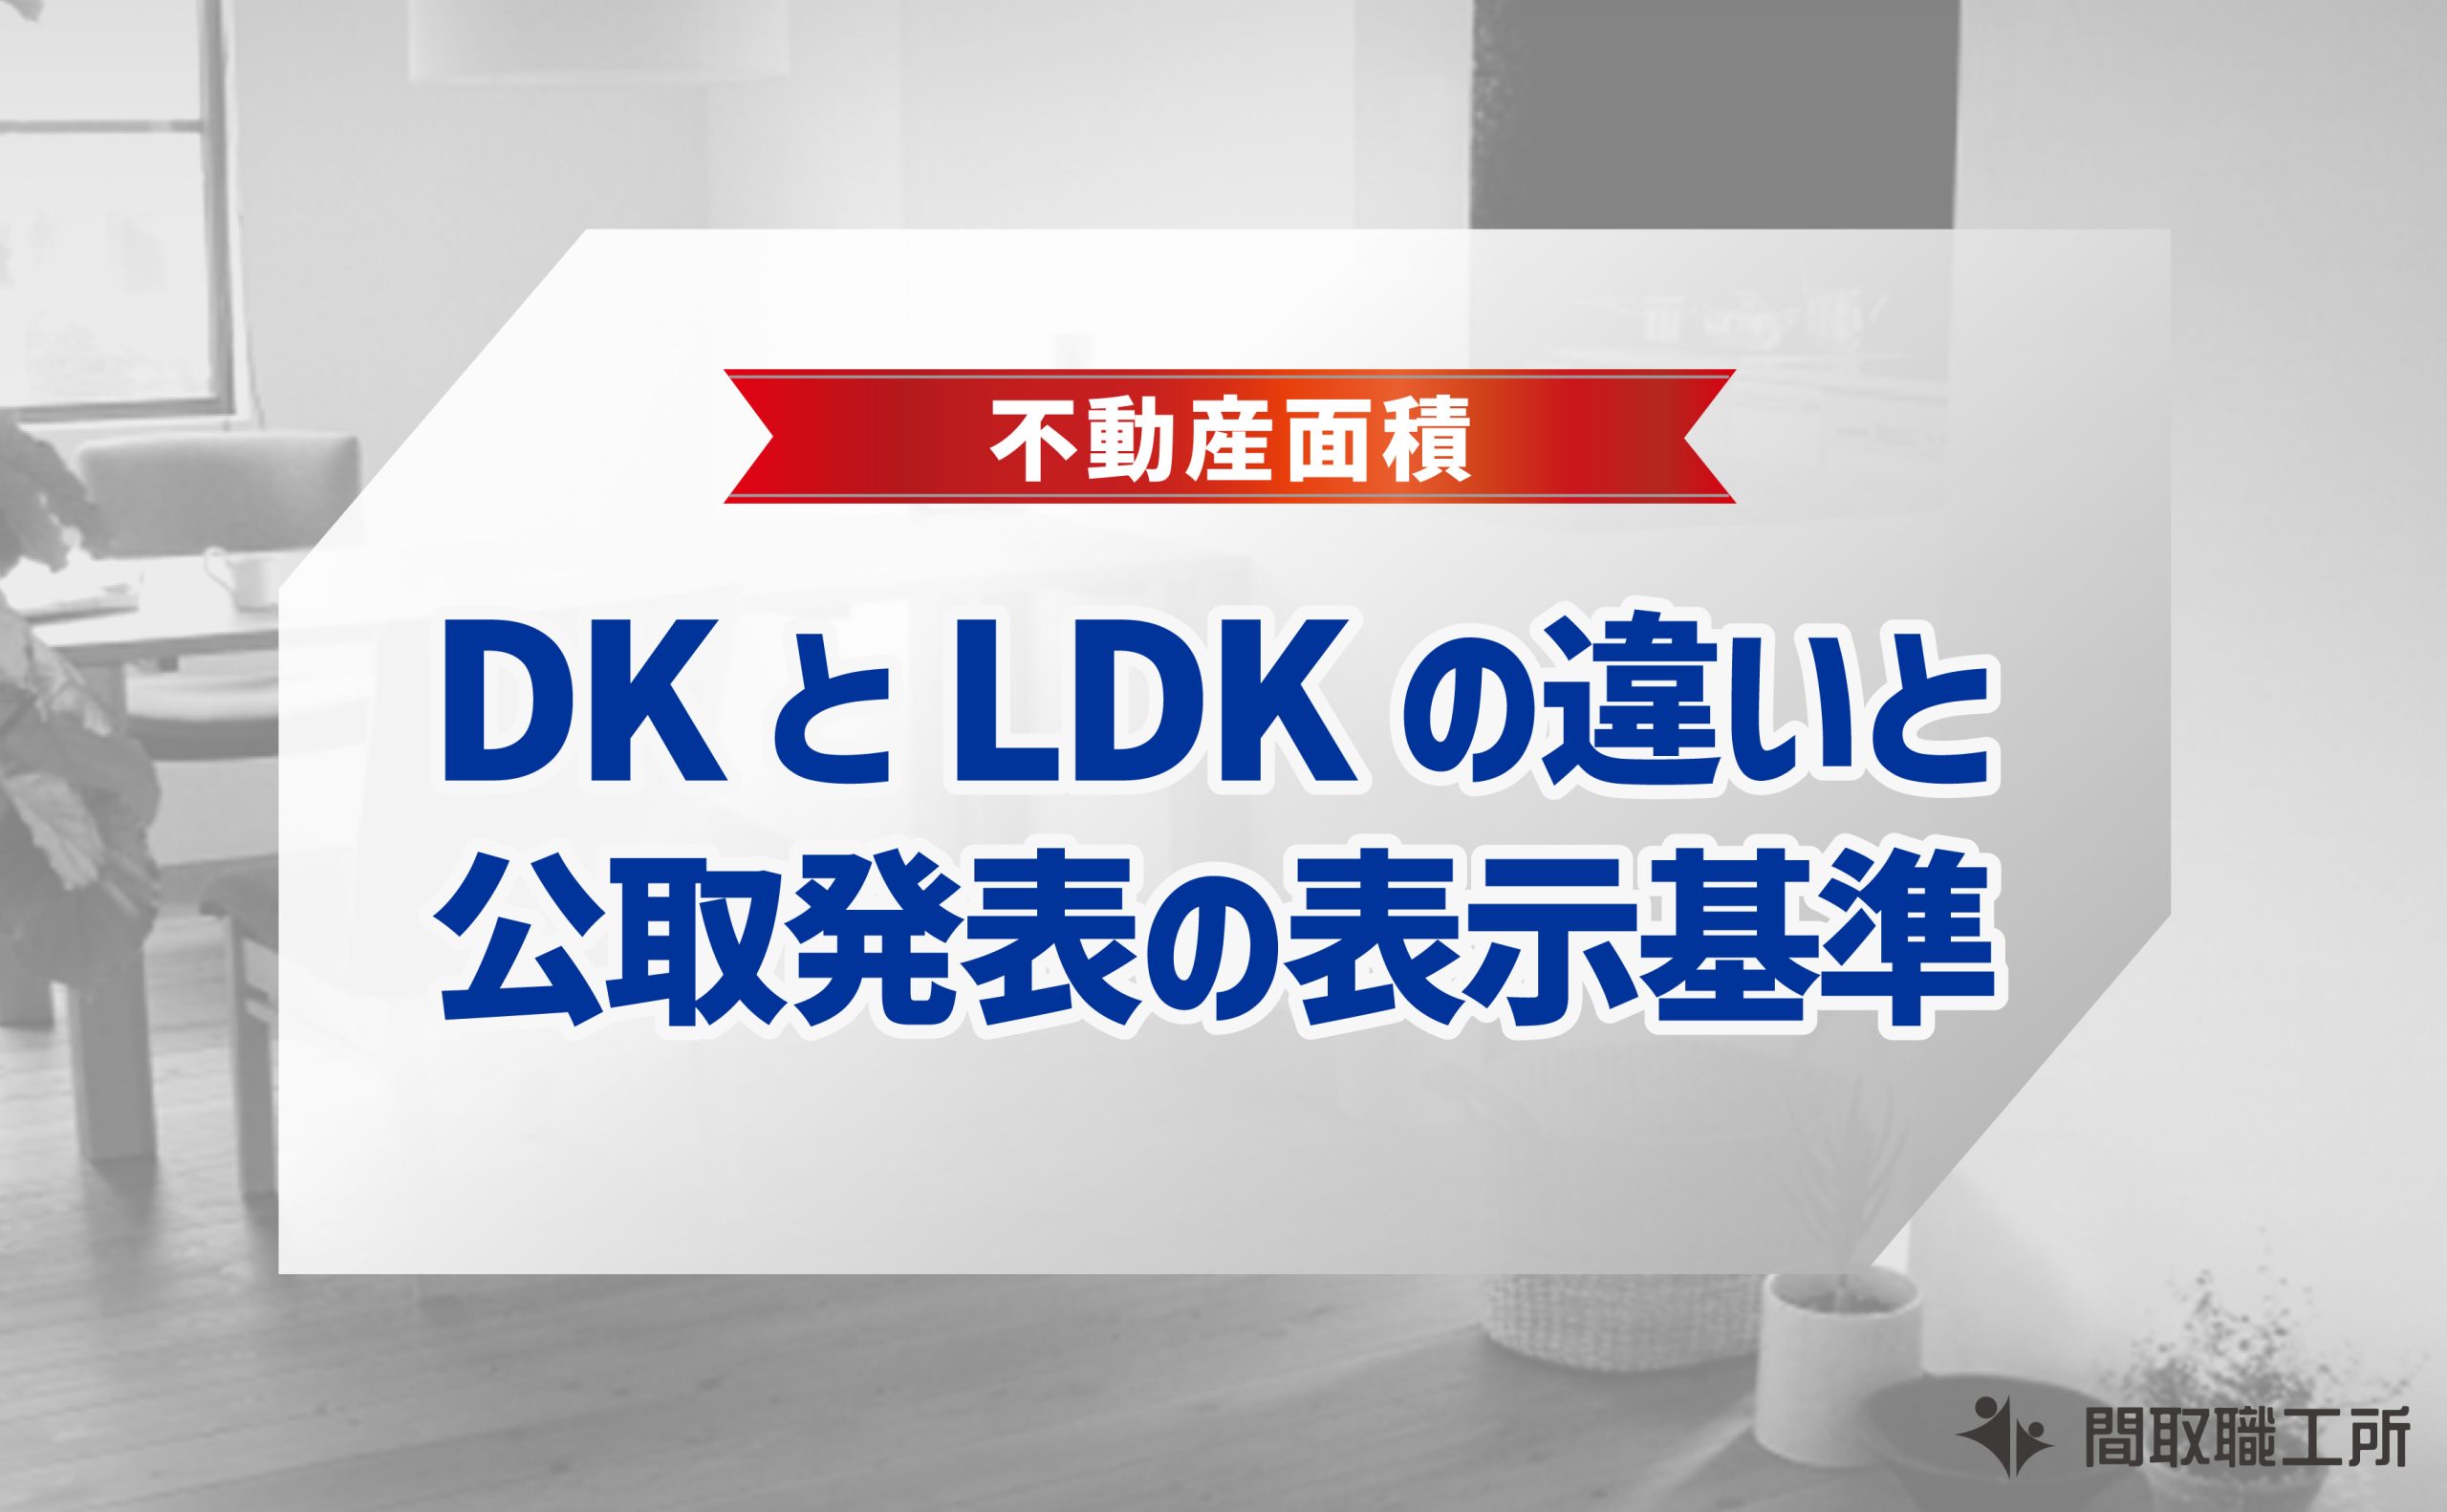 DK LDK 違い 公取発表 表示基準